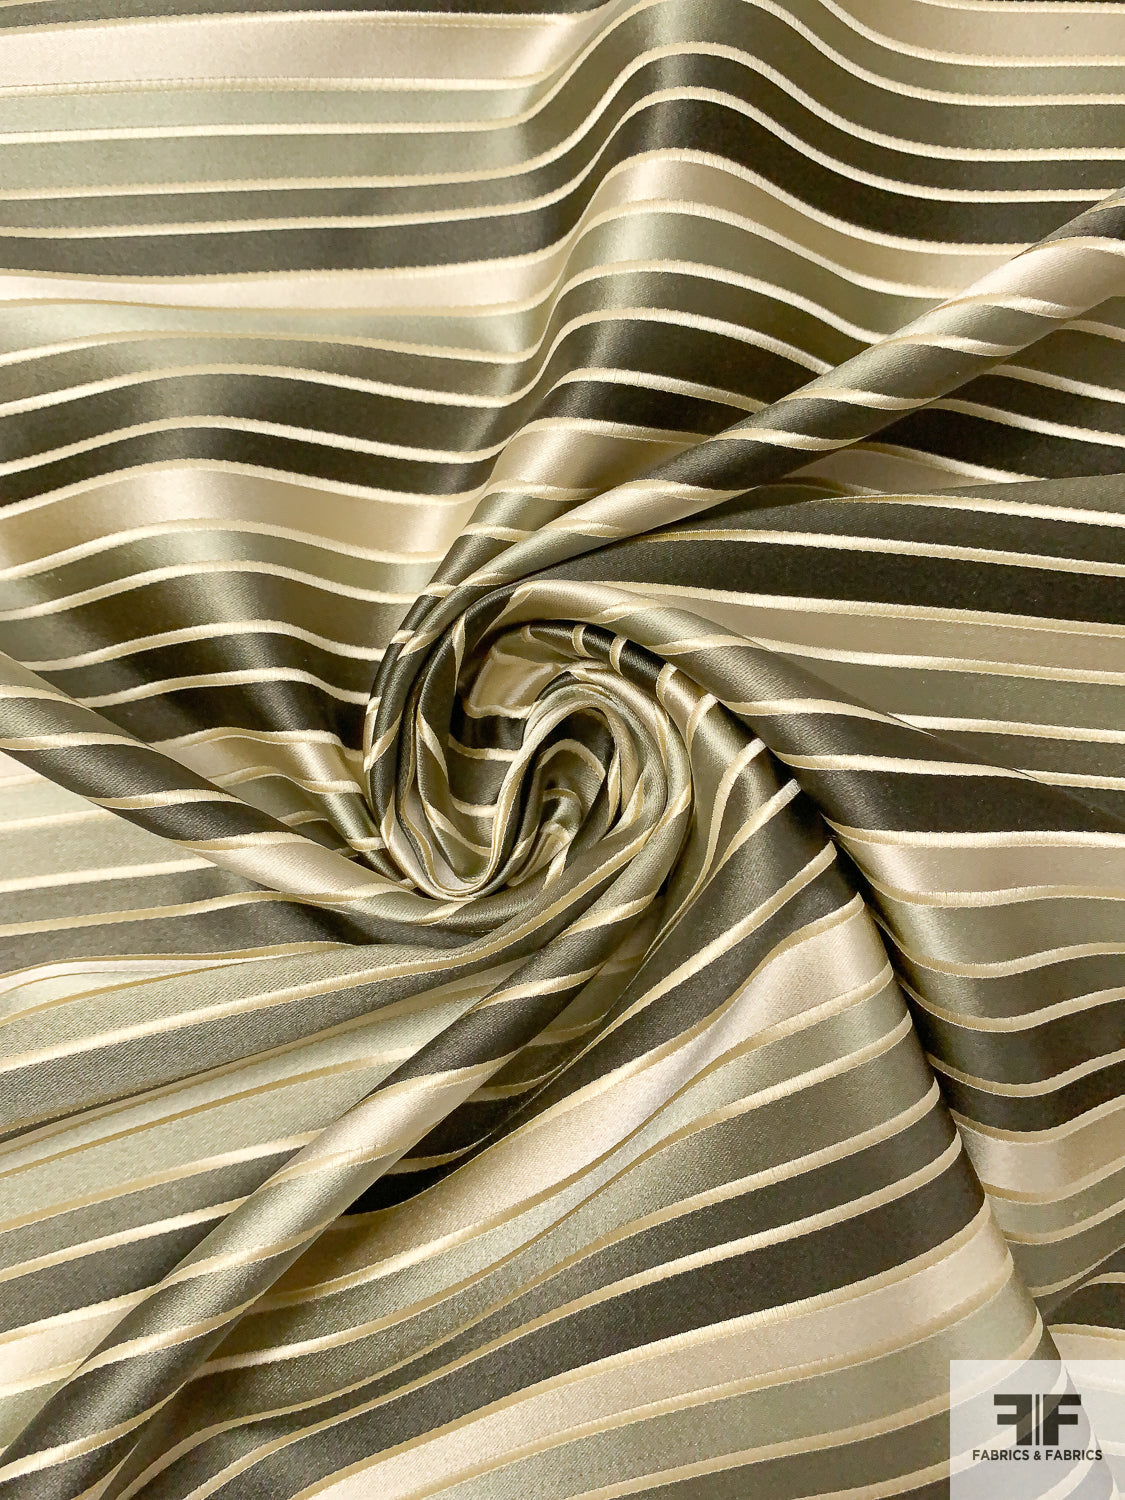 Horizontal Striped Silk Necktie Jacquard Brocade - Olive Greens / Beige / Light Gold